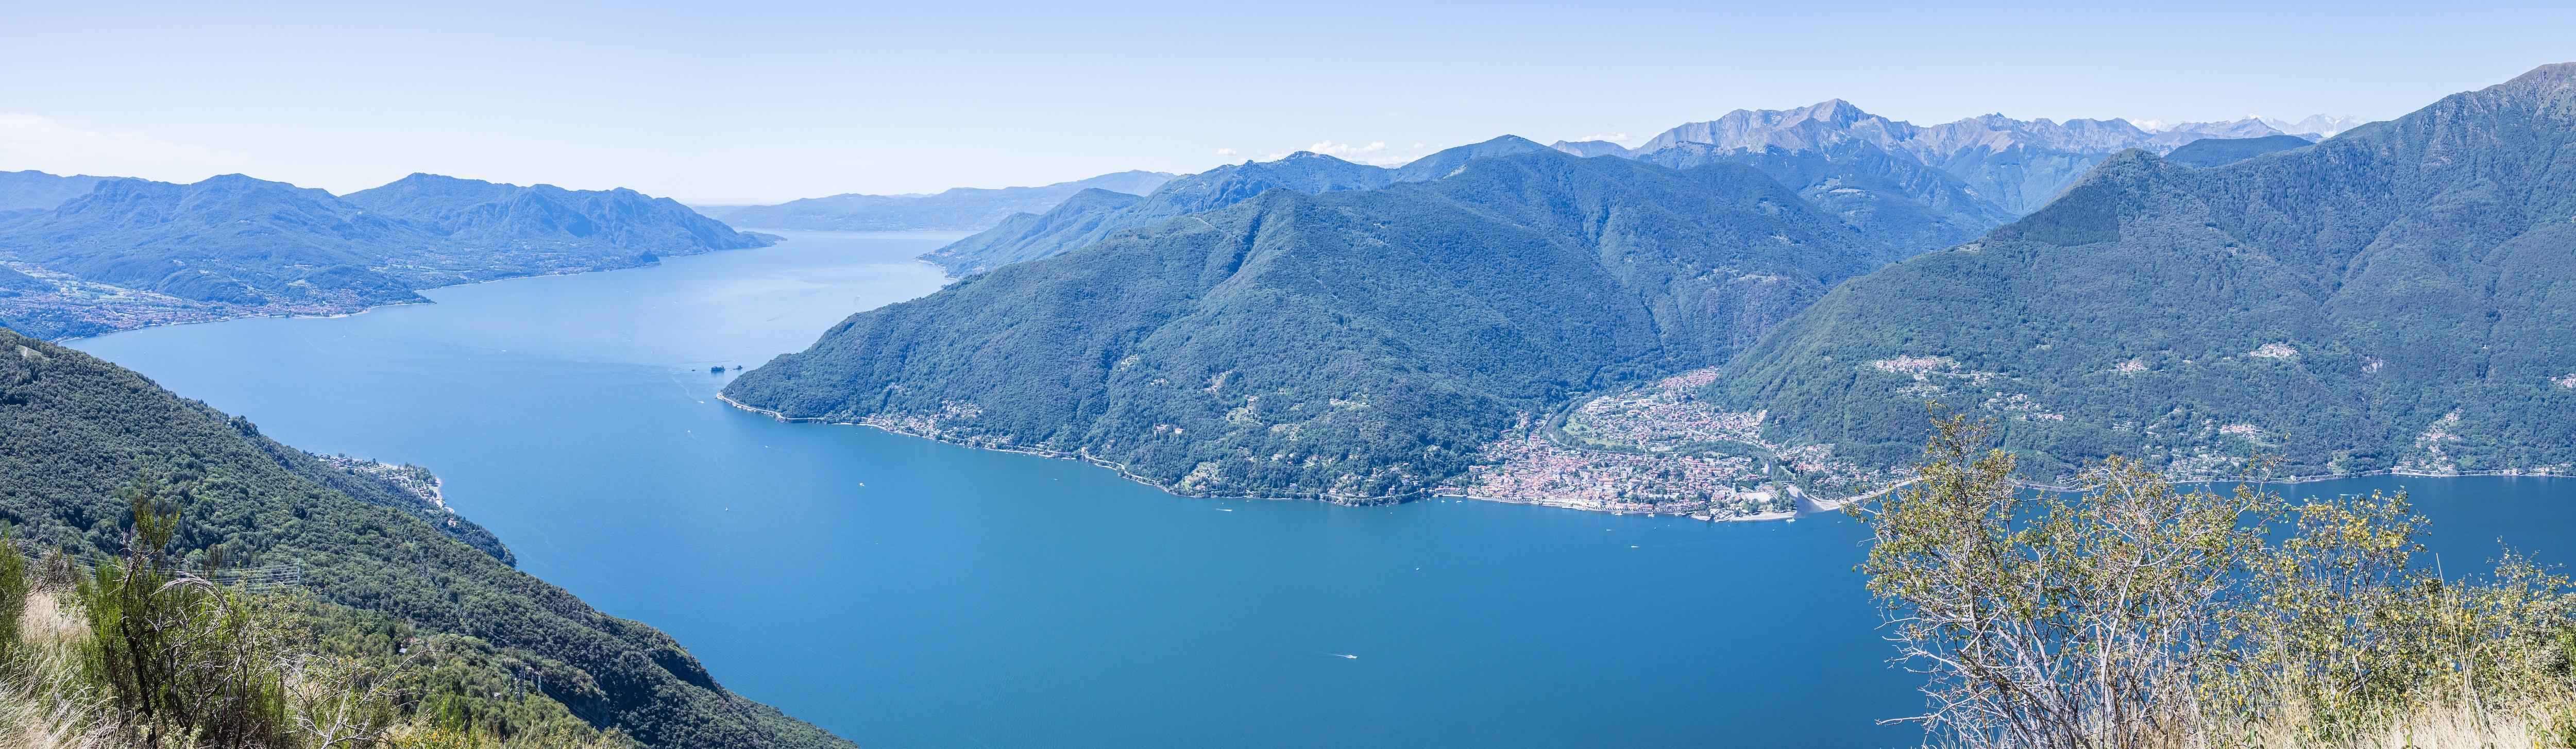 Panorama des Lago Maggiore